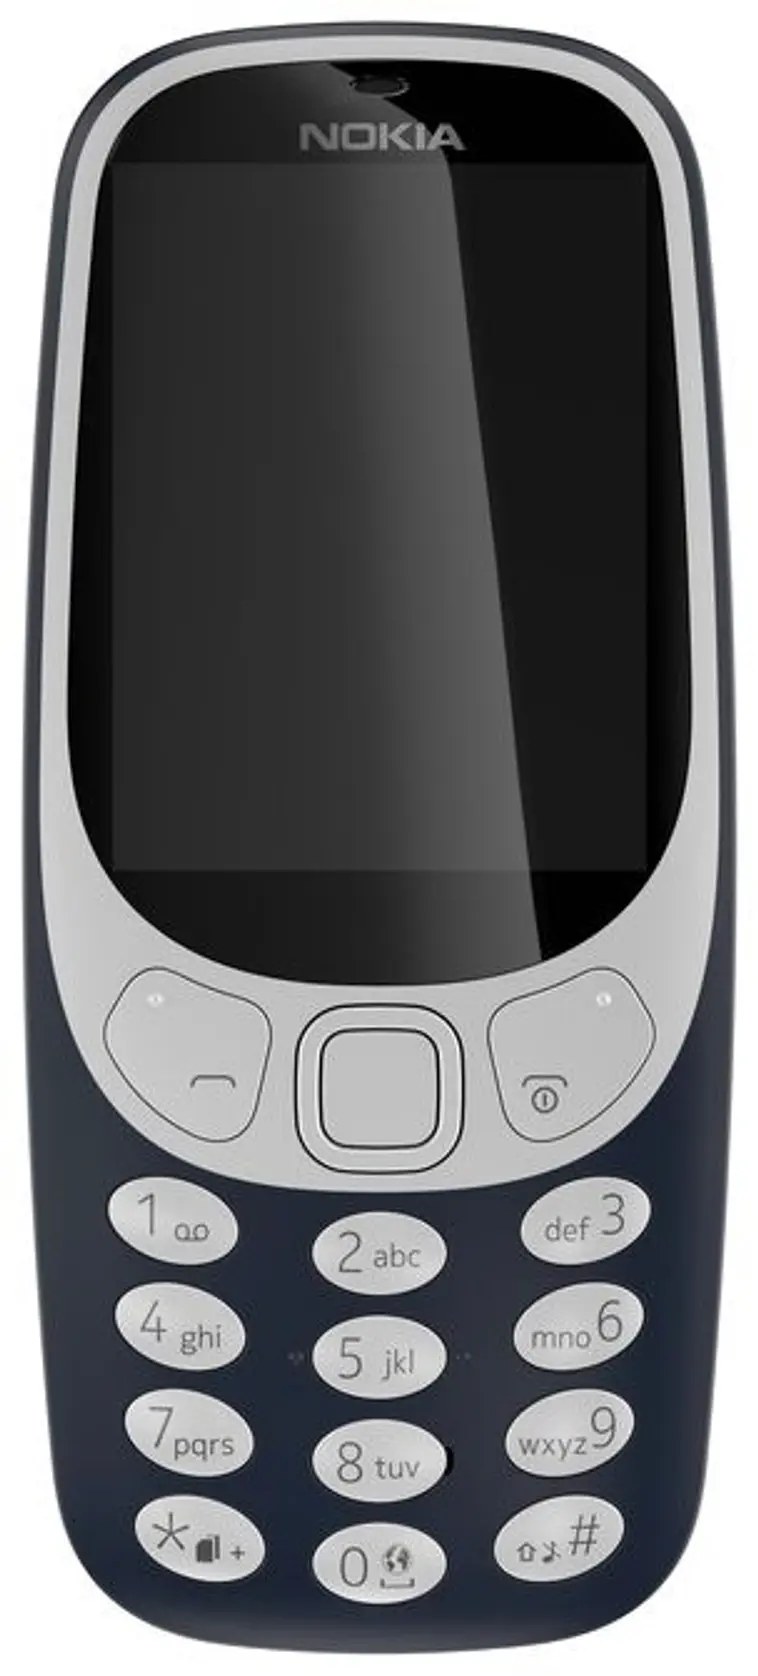 Nokia 3310 dual-sim 2G matkapuhelin musta | Prisma verkkokauppa